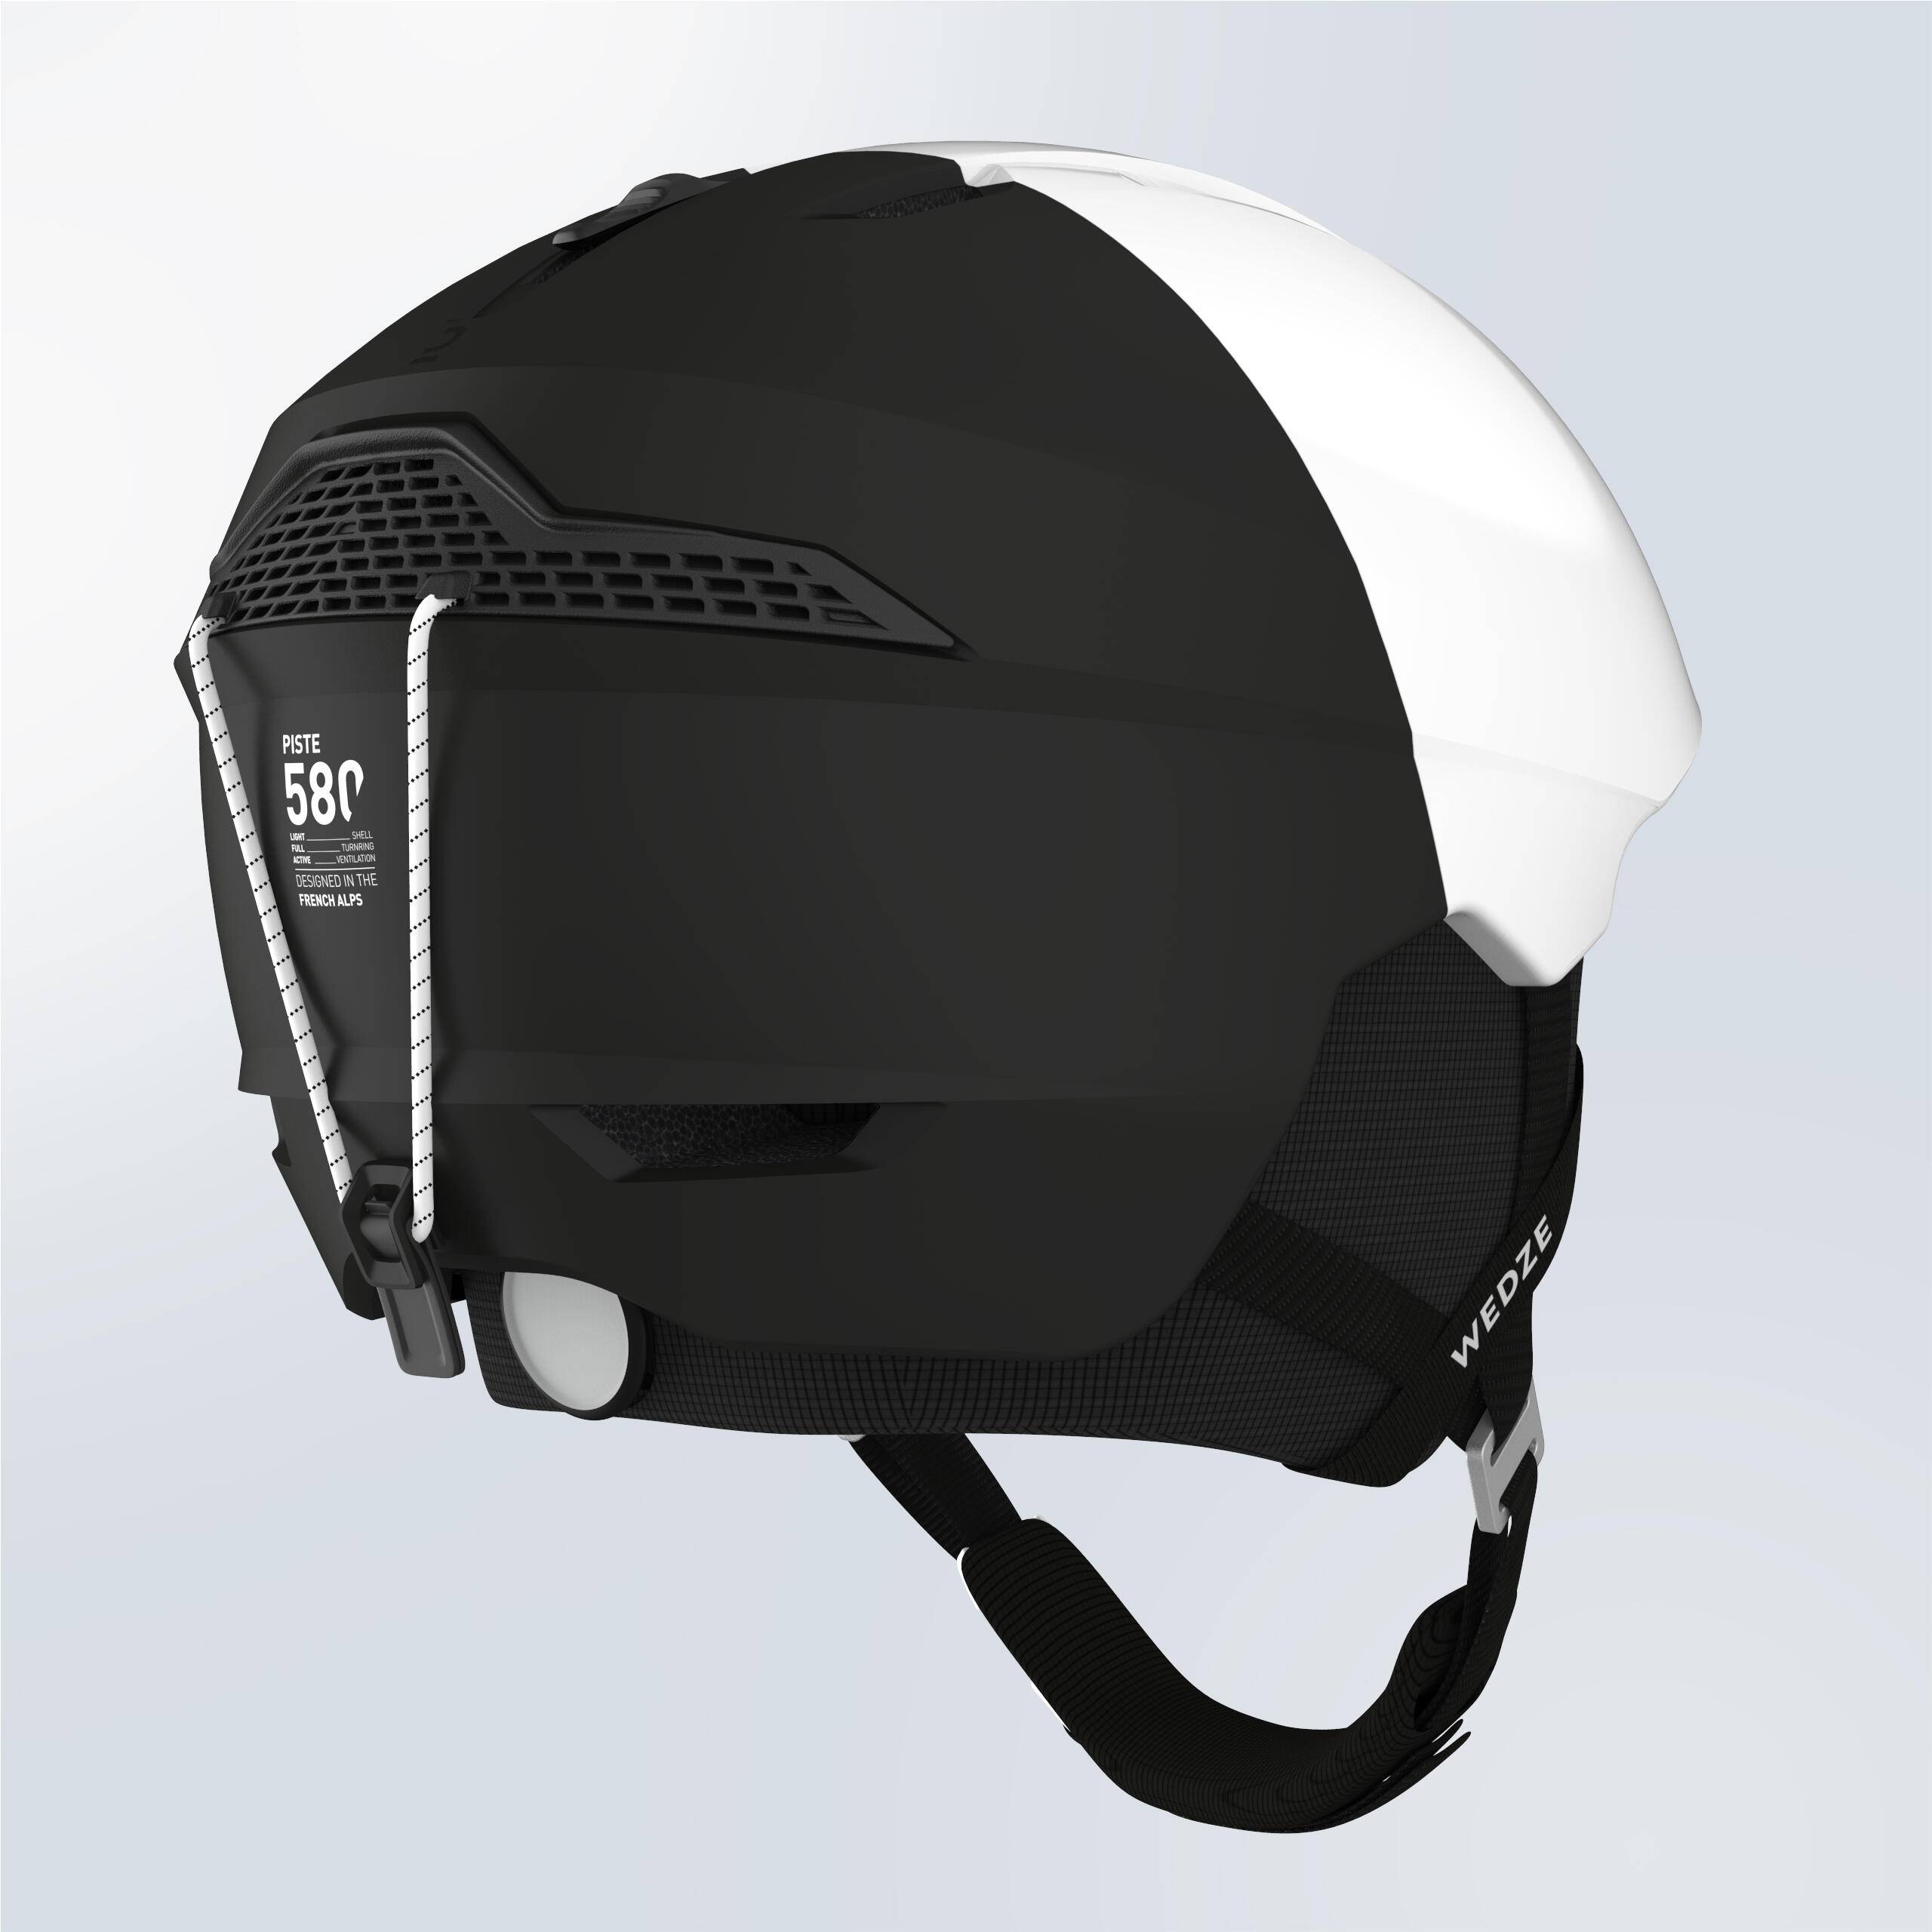 Adult Ski Helmet - PST 580 - Black and white 6/9